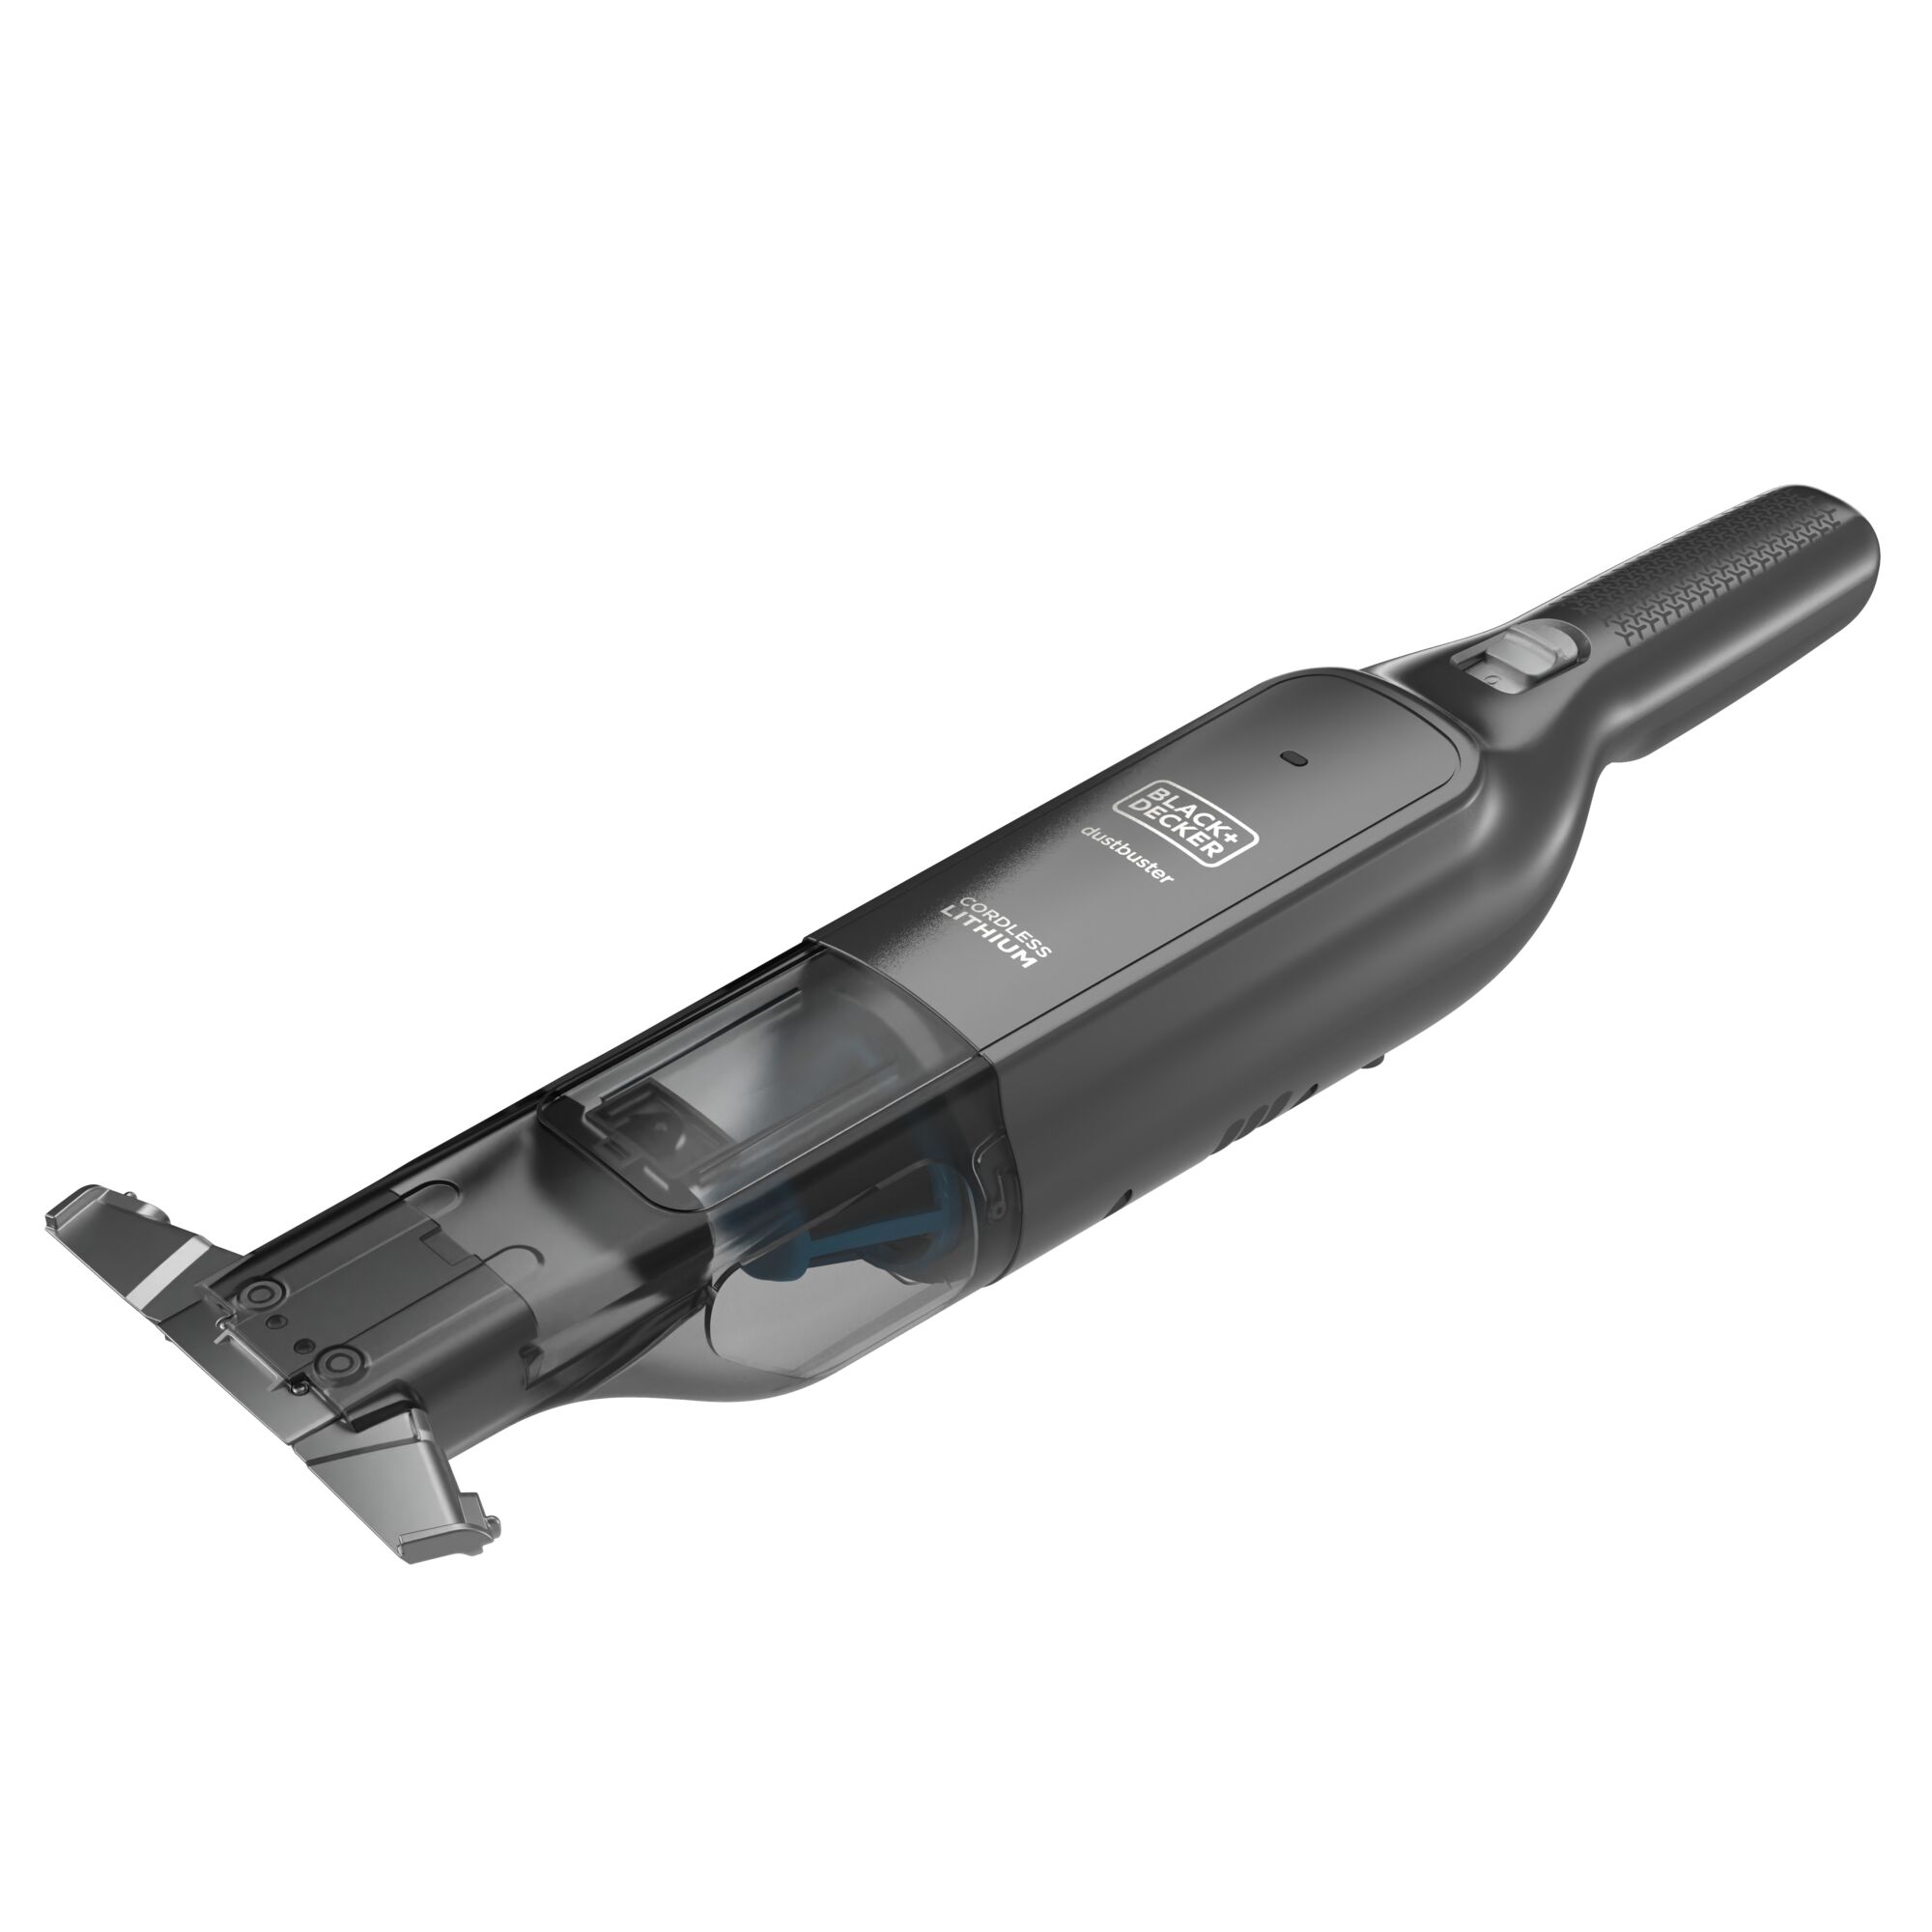 Profile of Dustbuster 12 volt MAX Advanced Clean Cordless Hand Vacuum.